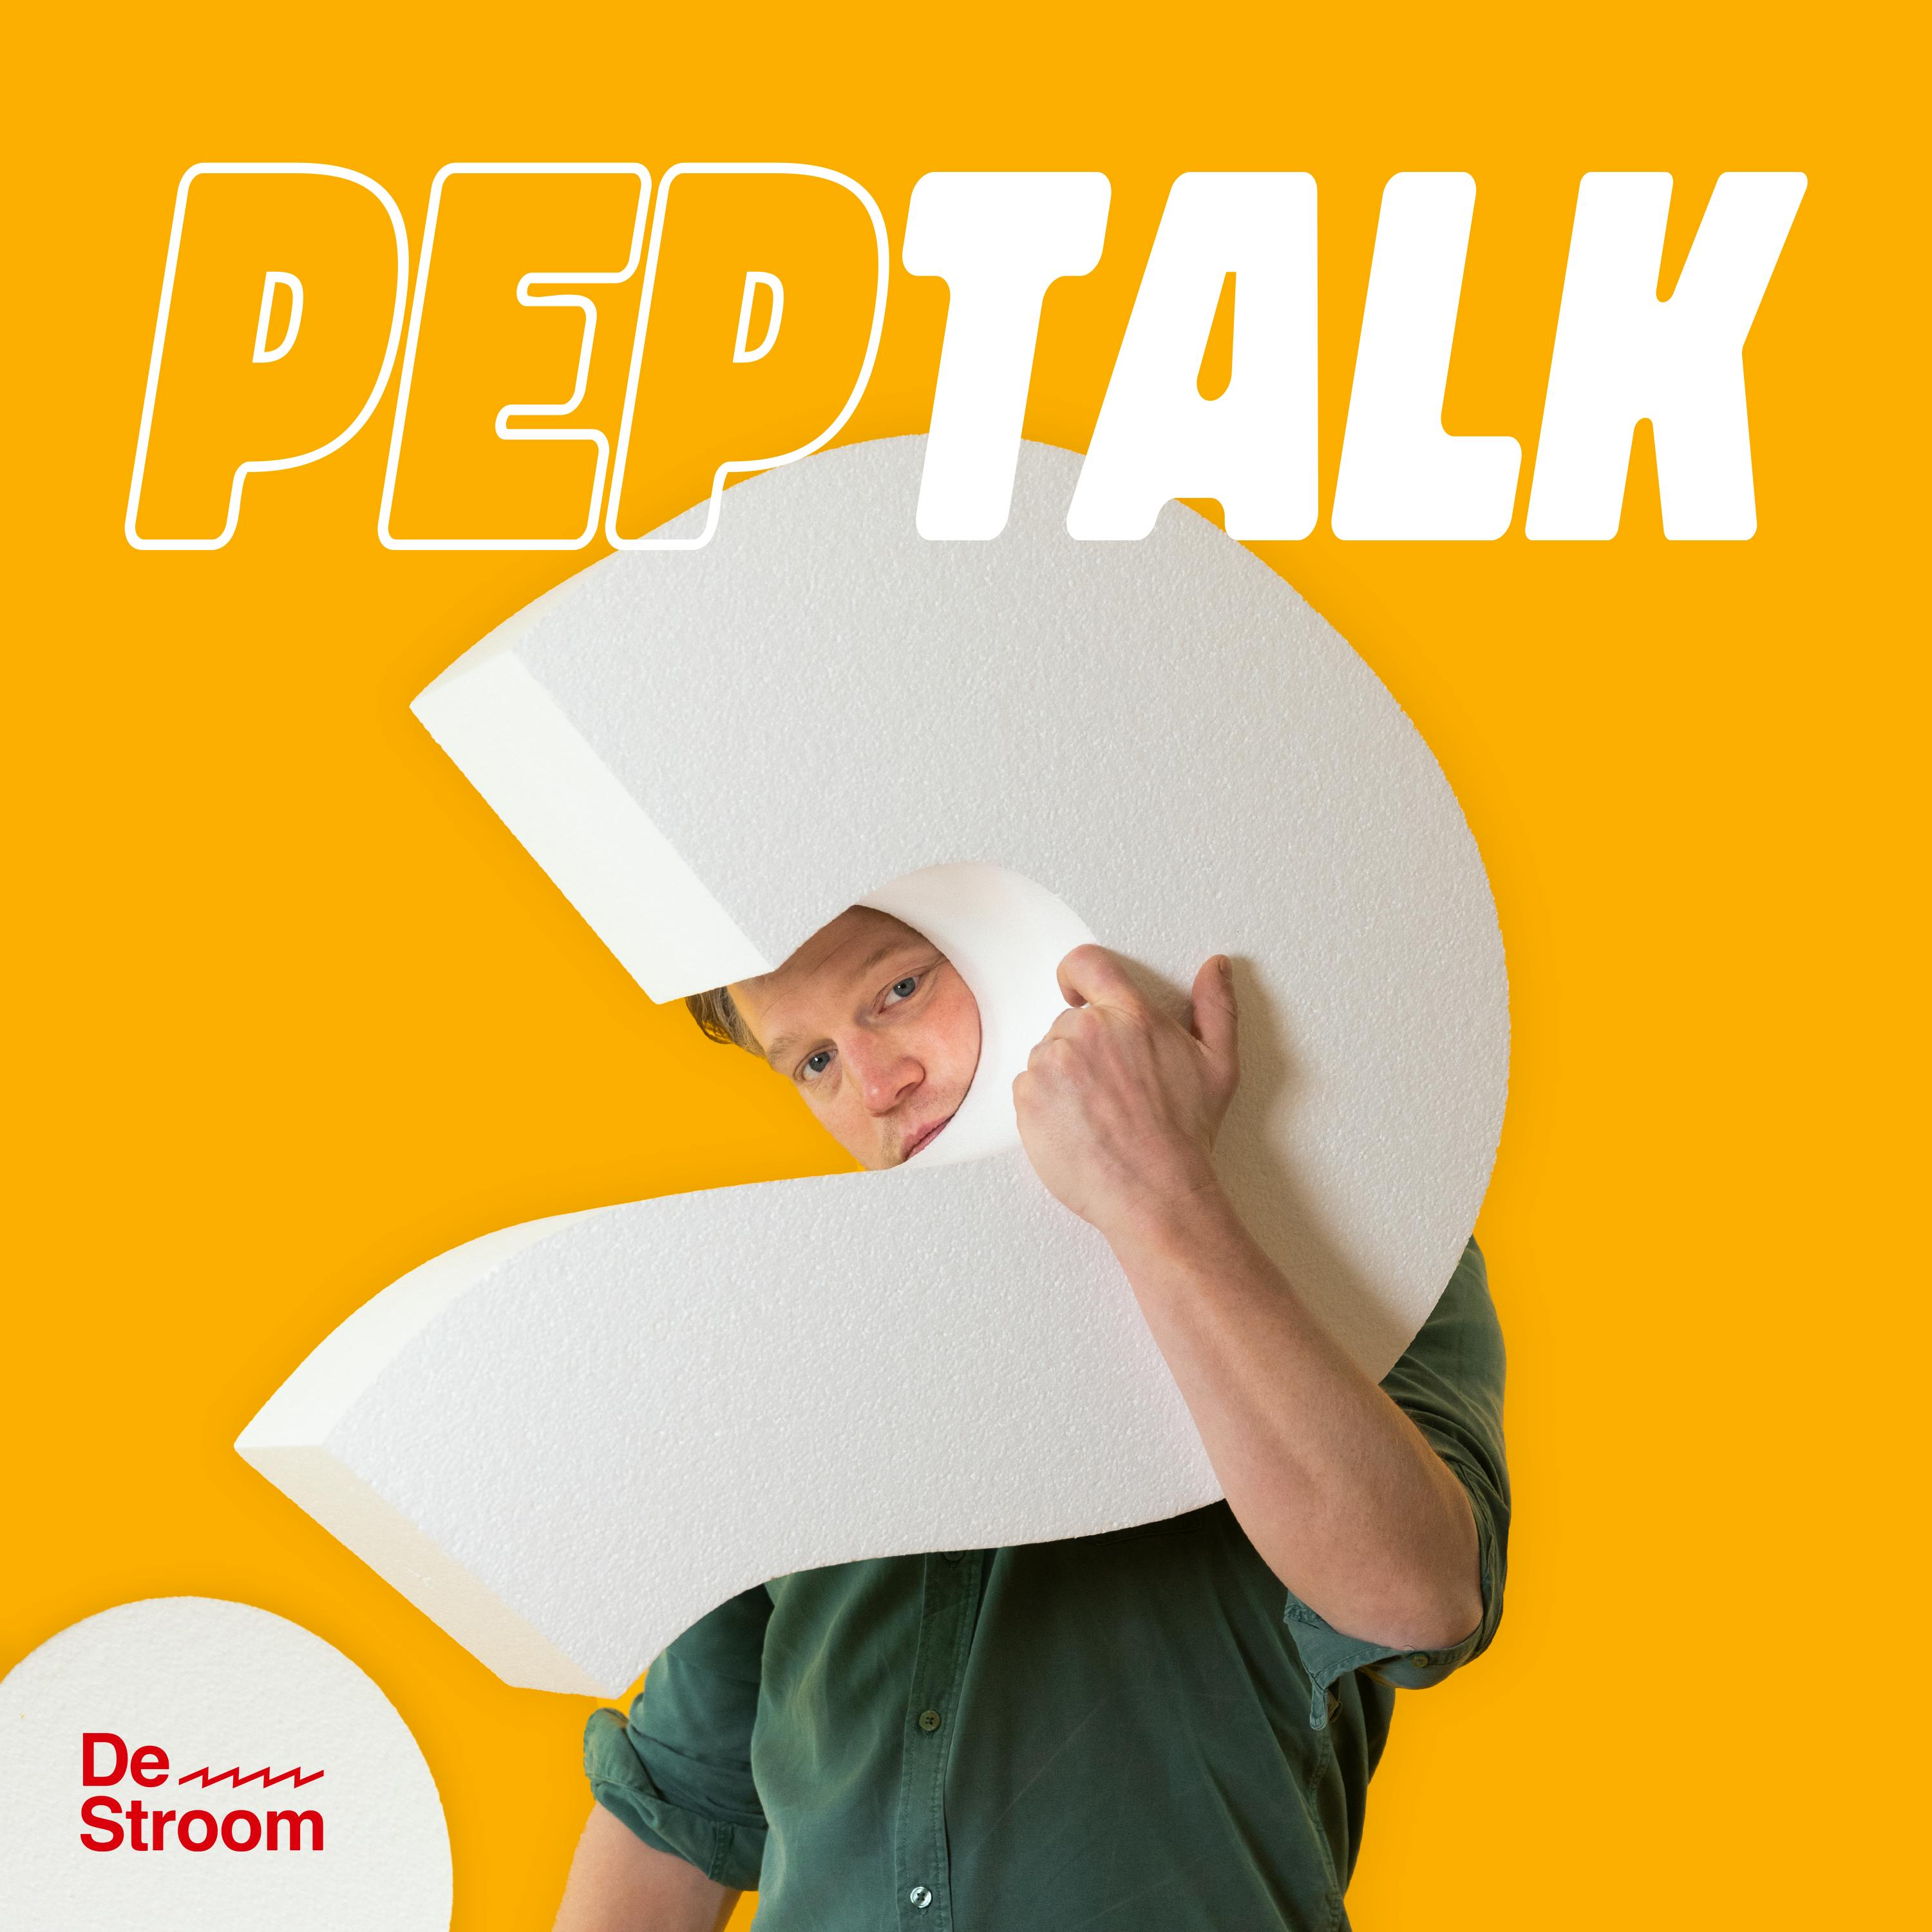 PepTalk logo